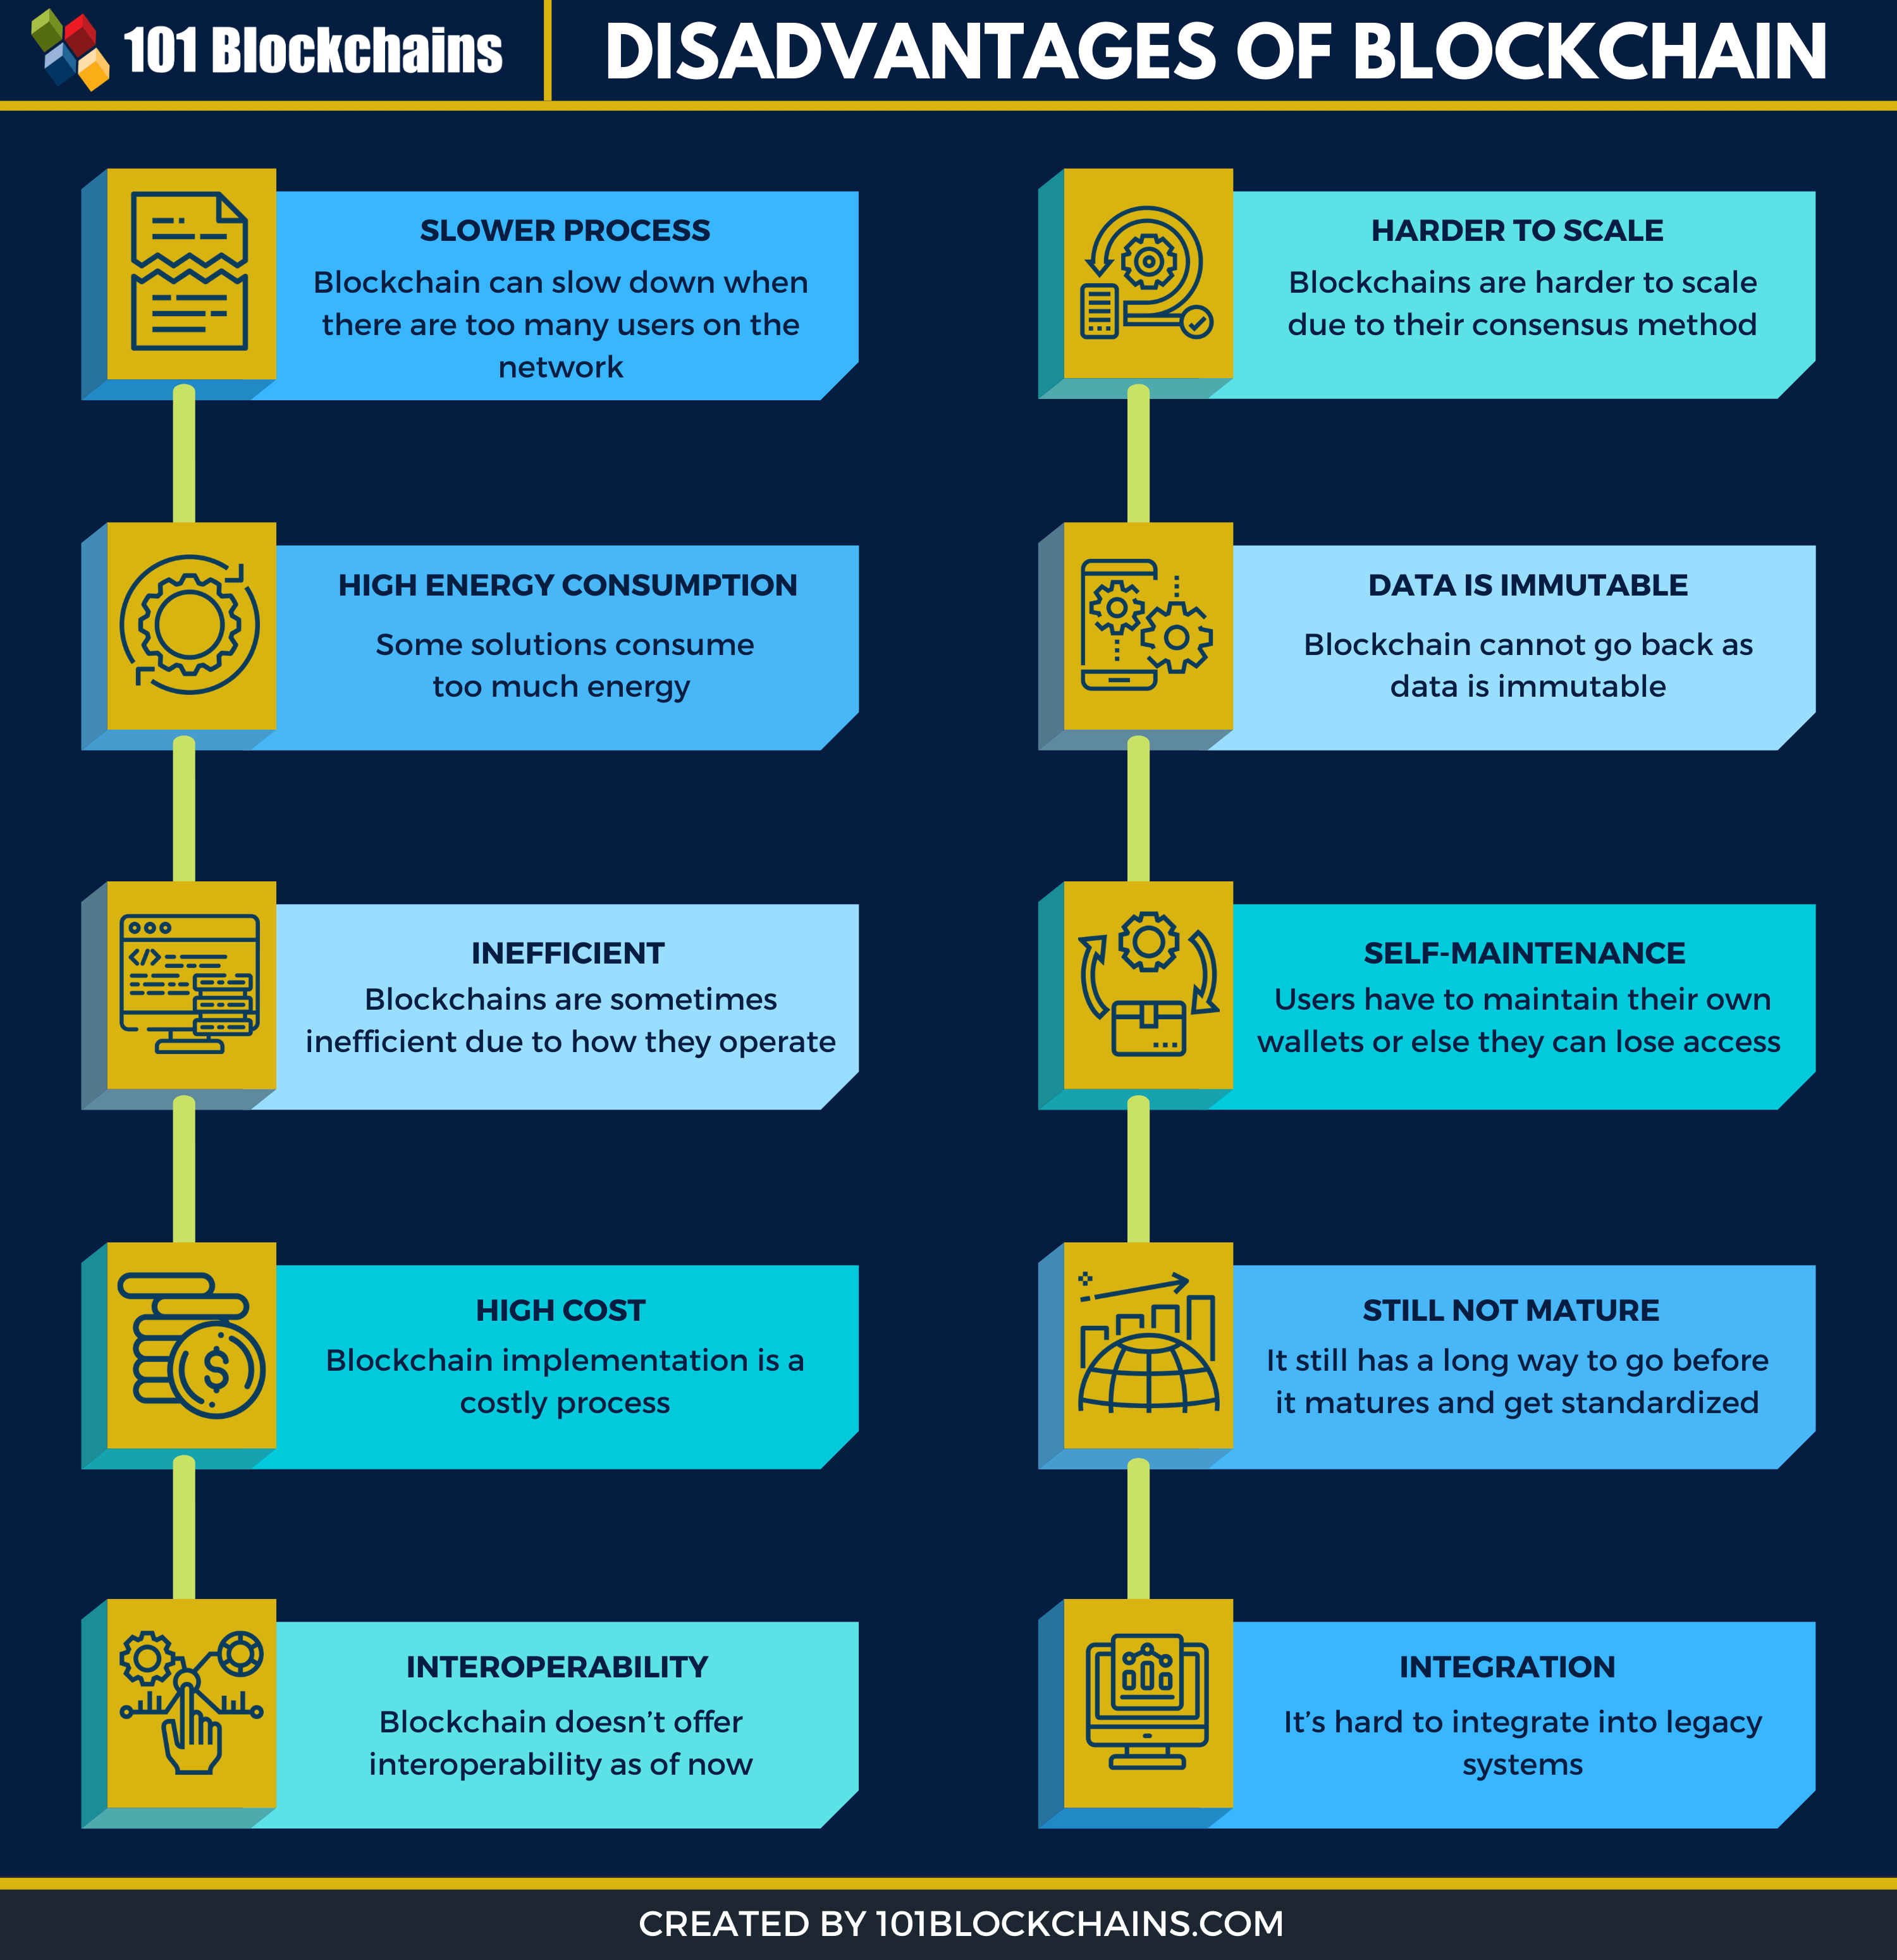 Disadvantages of Blockchain